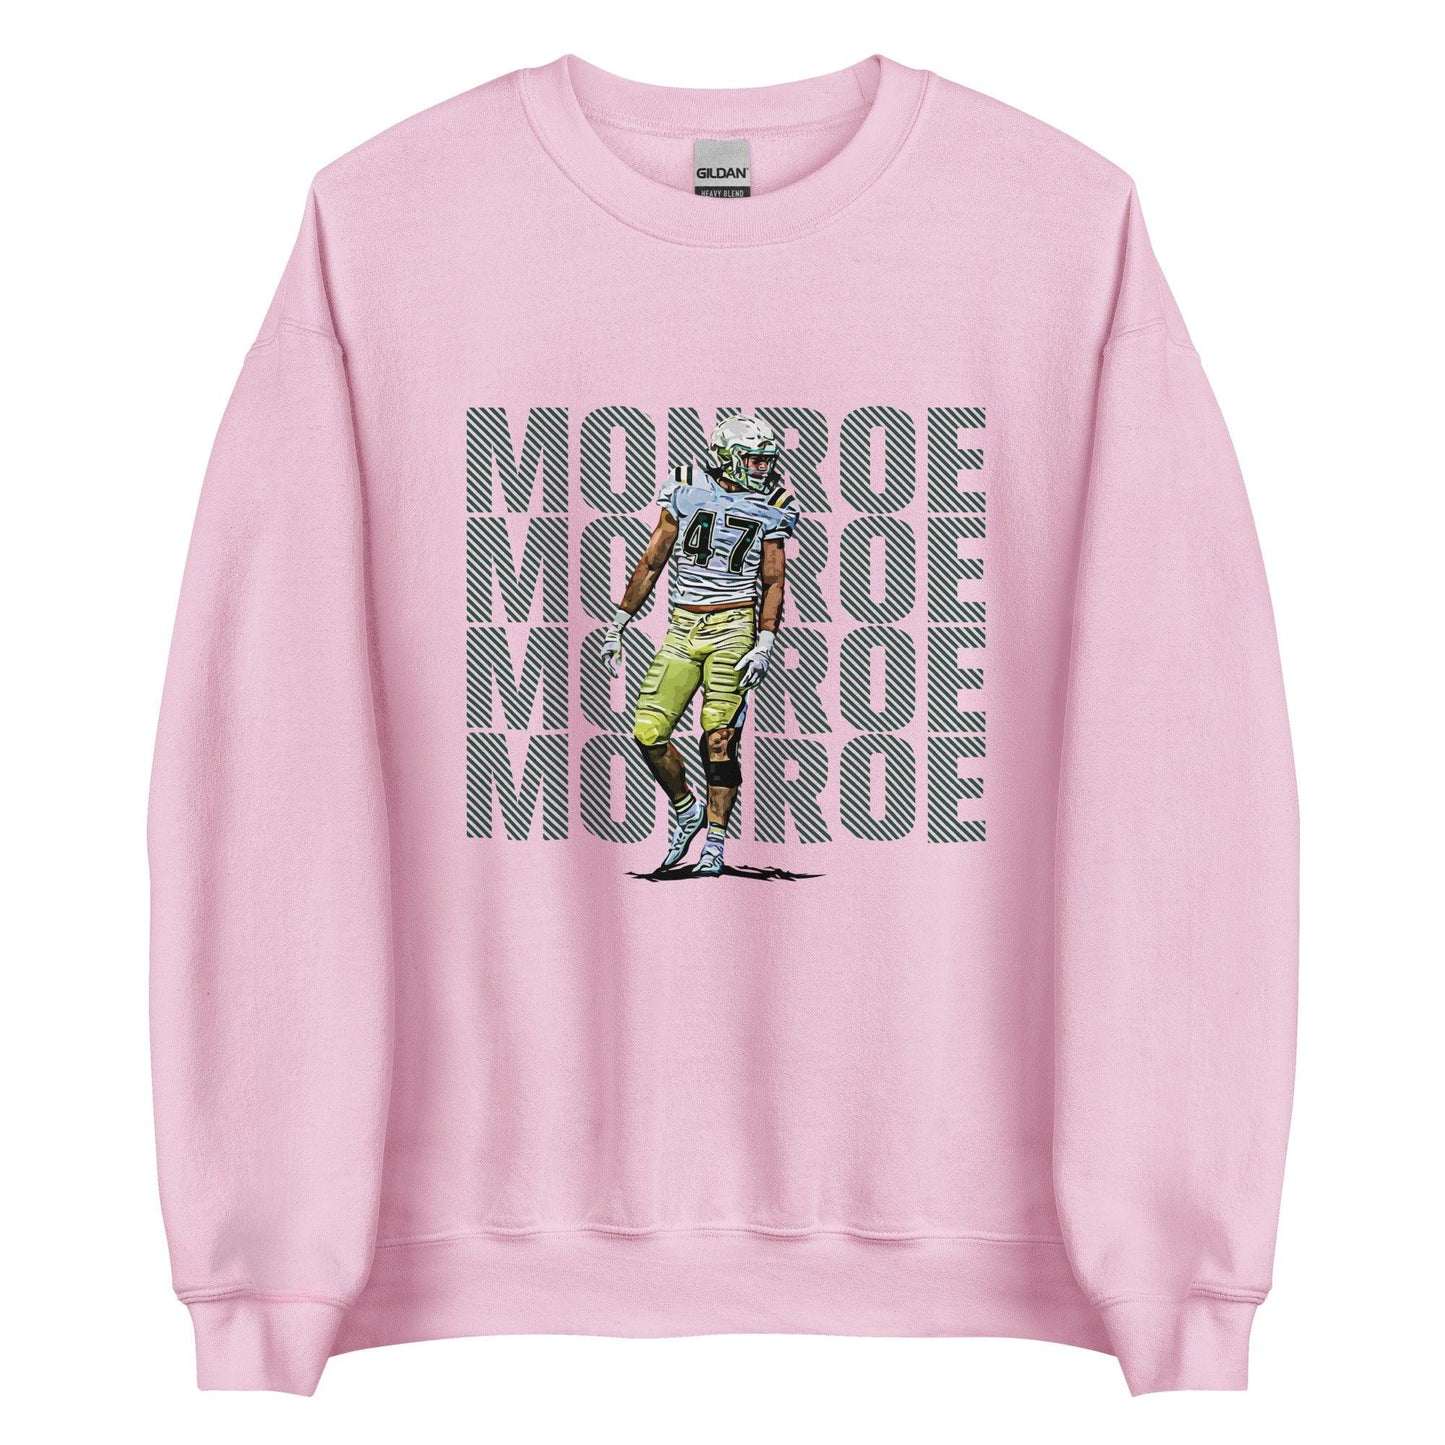 Chase Monroe "Gameday" Sweatshirt - Fan Arch